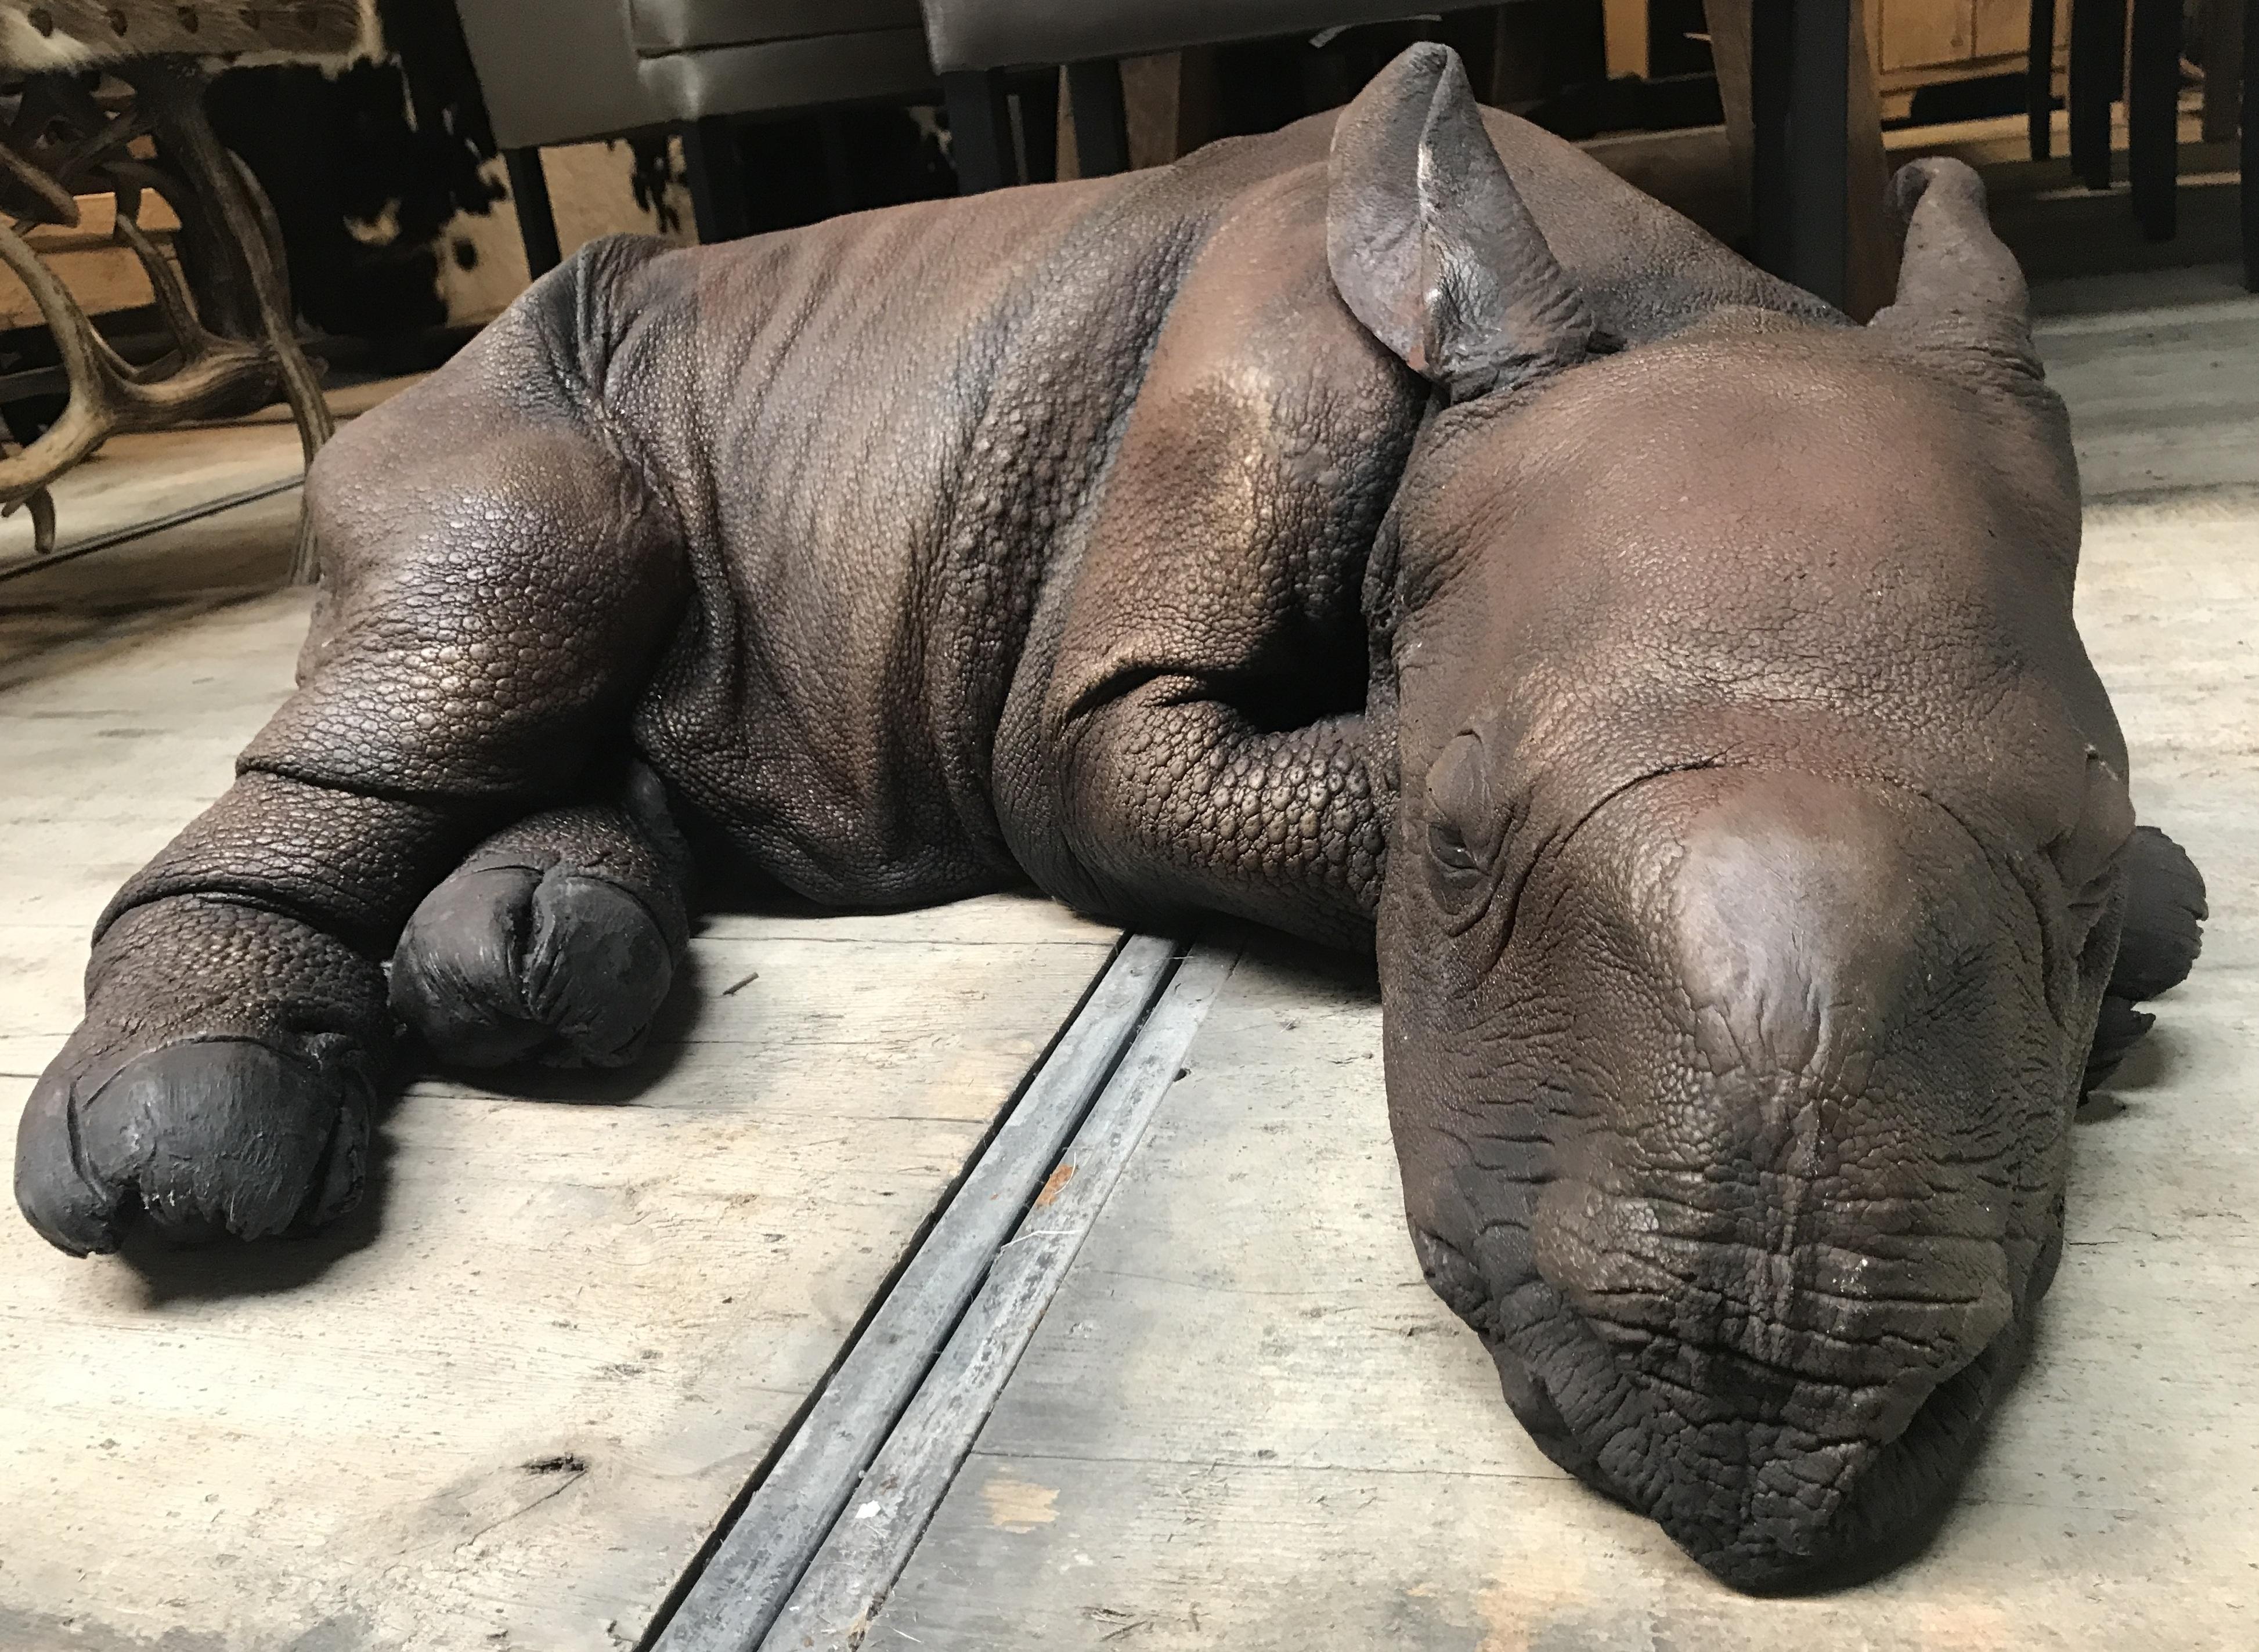 European Lifelike Replica of a Rhino Calf